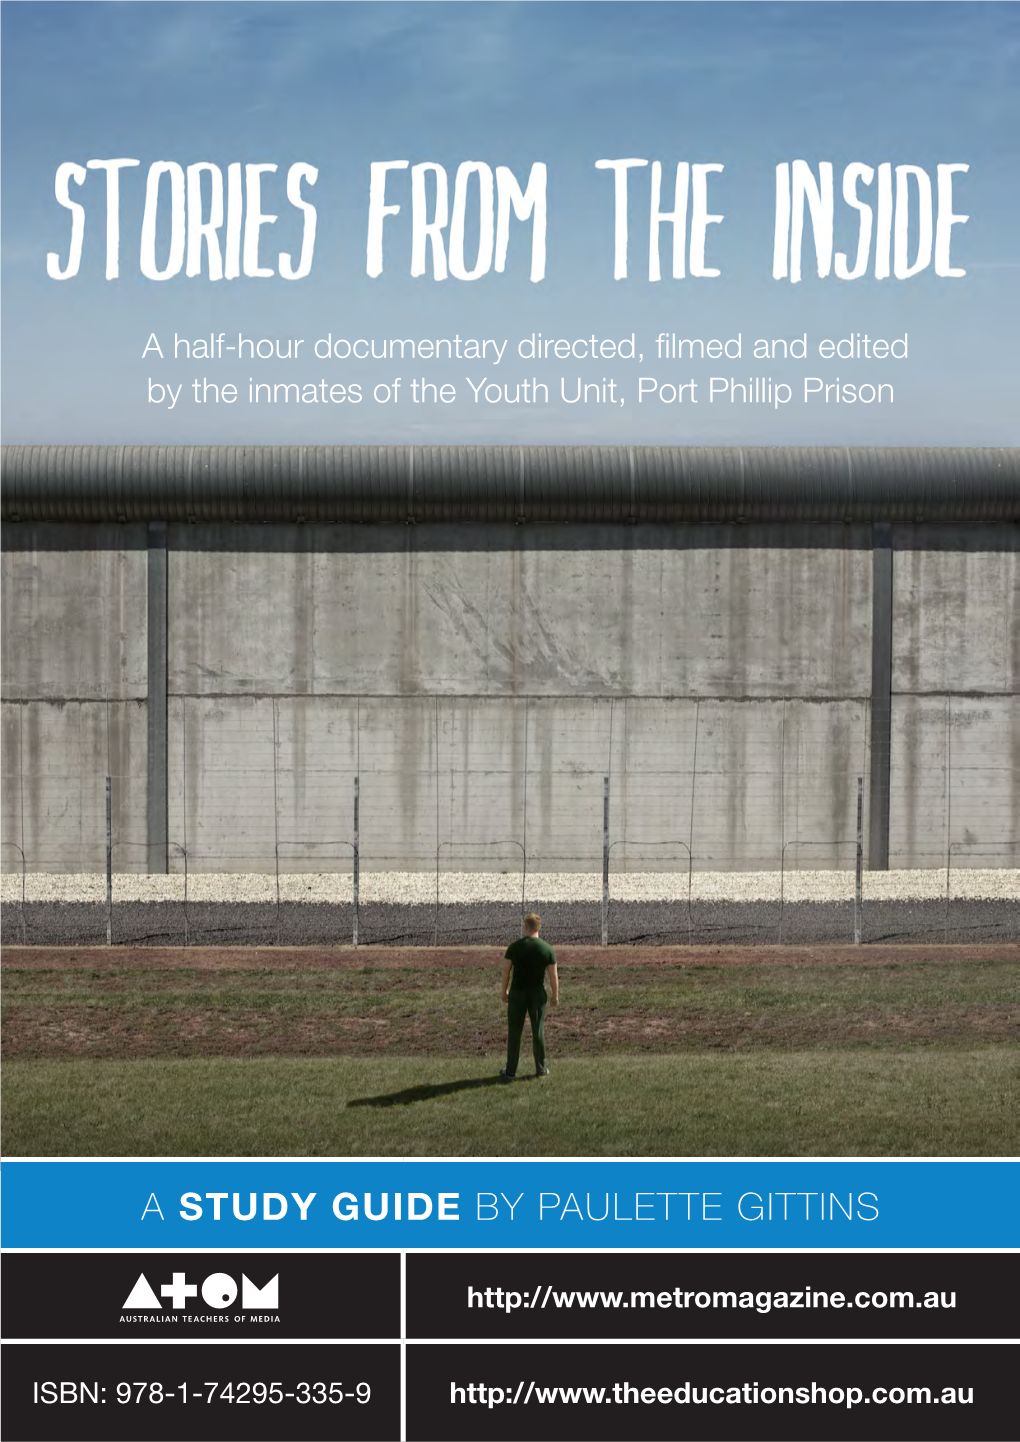 Study Guide by Paulette Gittins